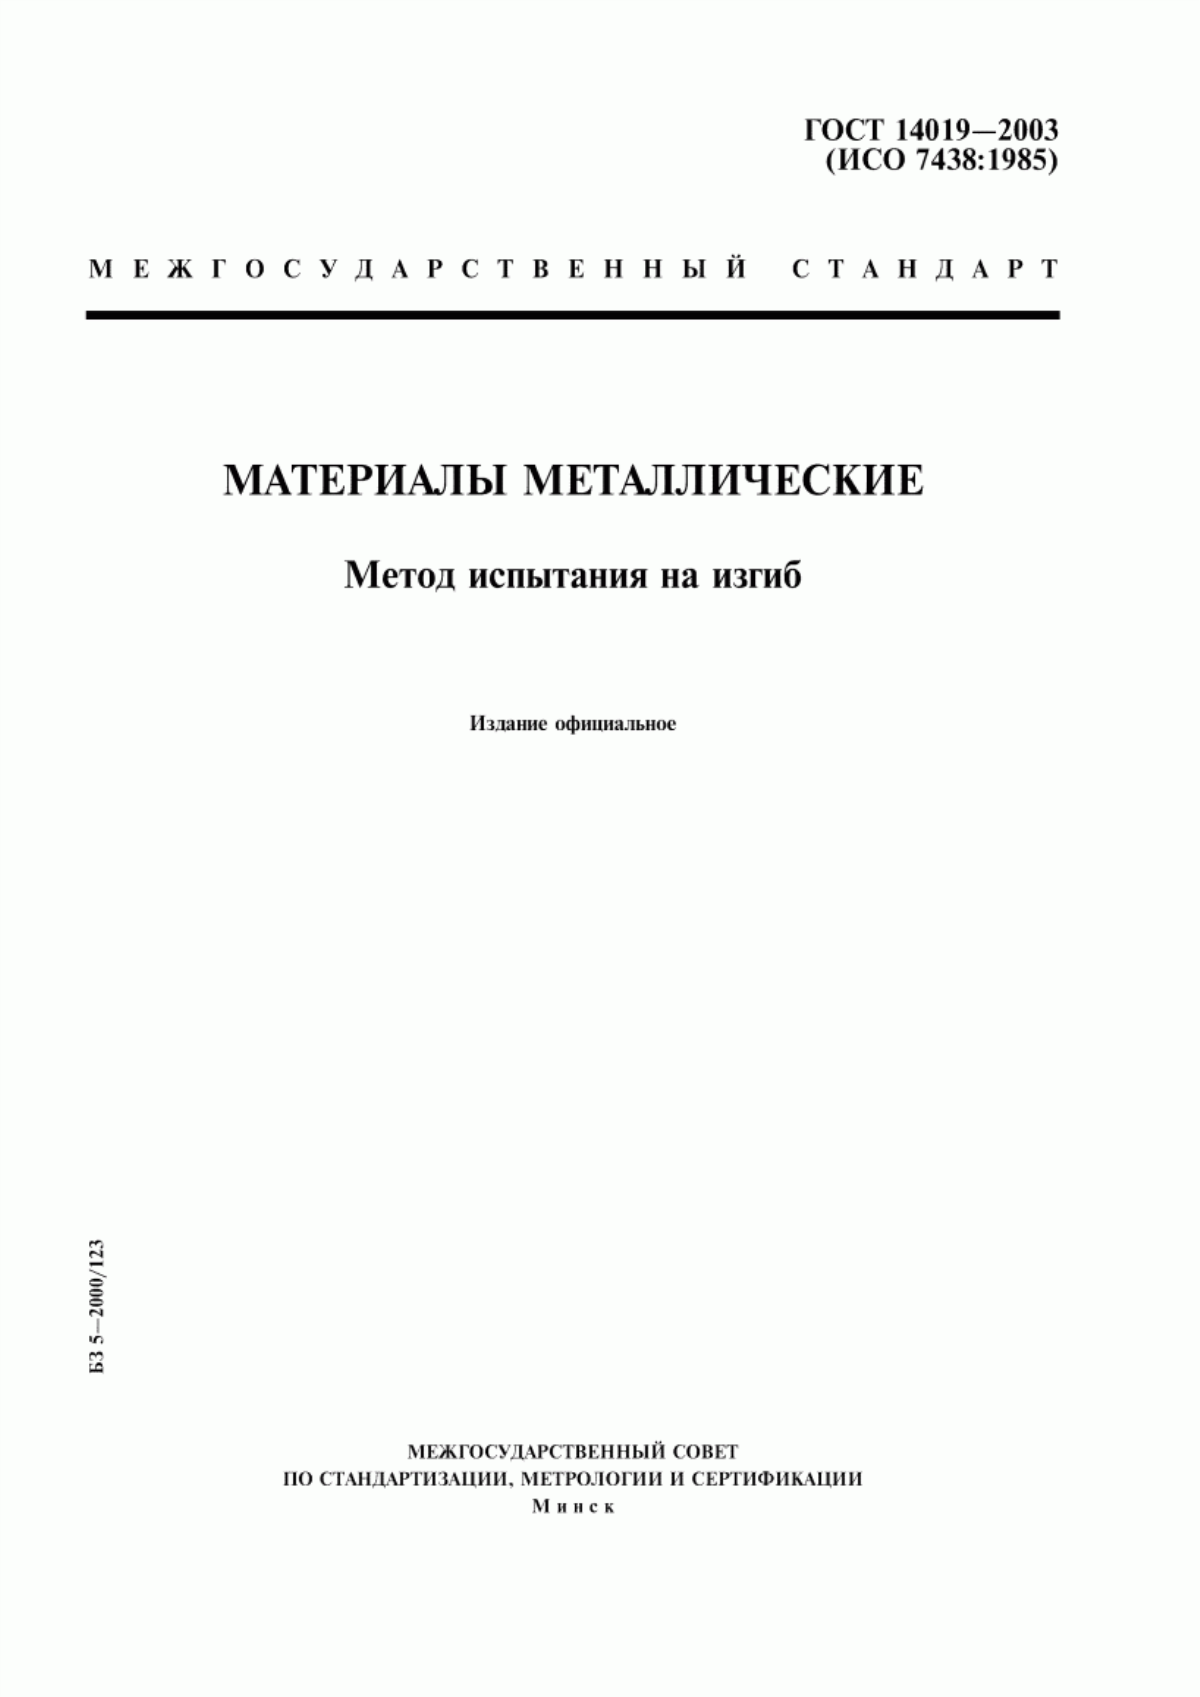 ГОСТ 14019-2003 Материалы металлические. Метод испытания на изгиб